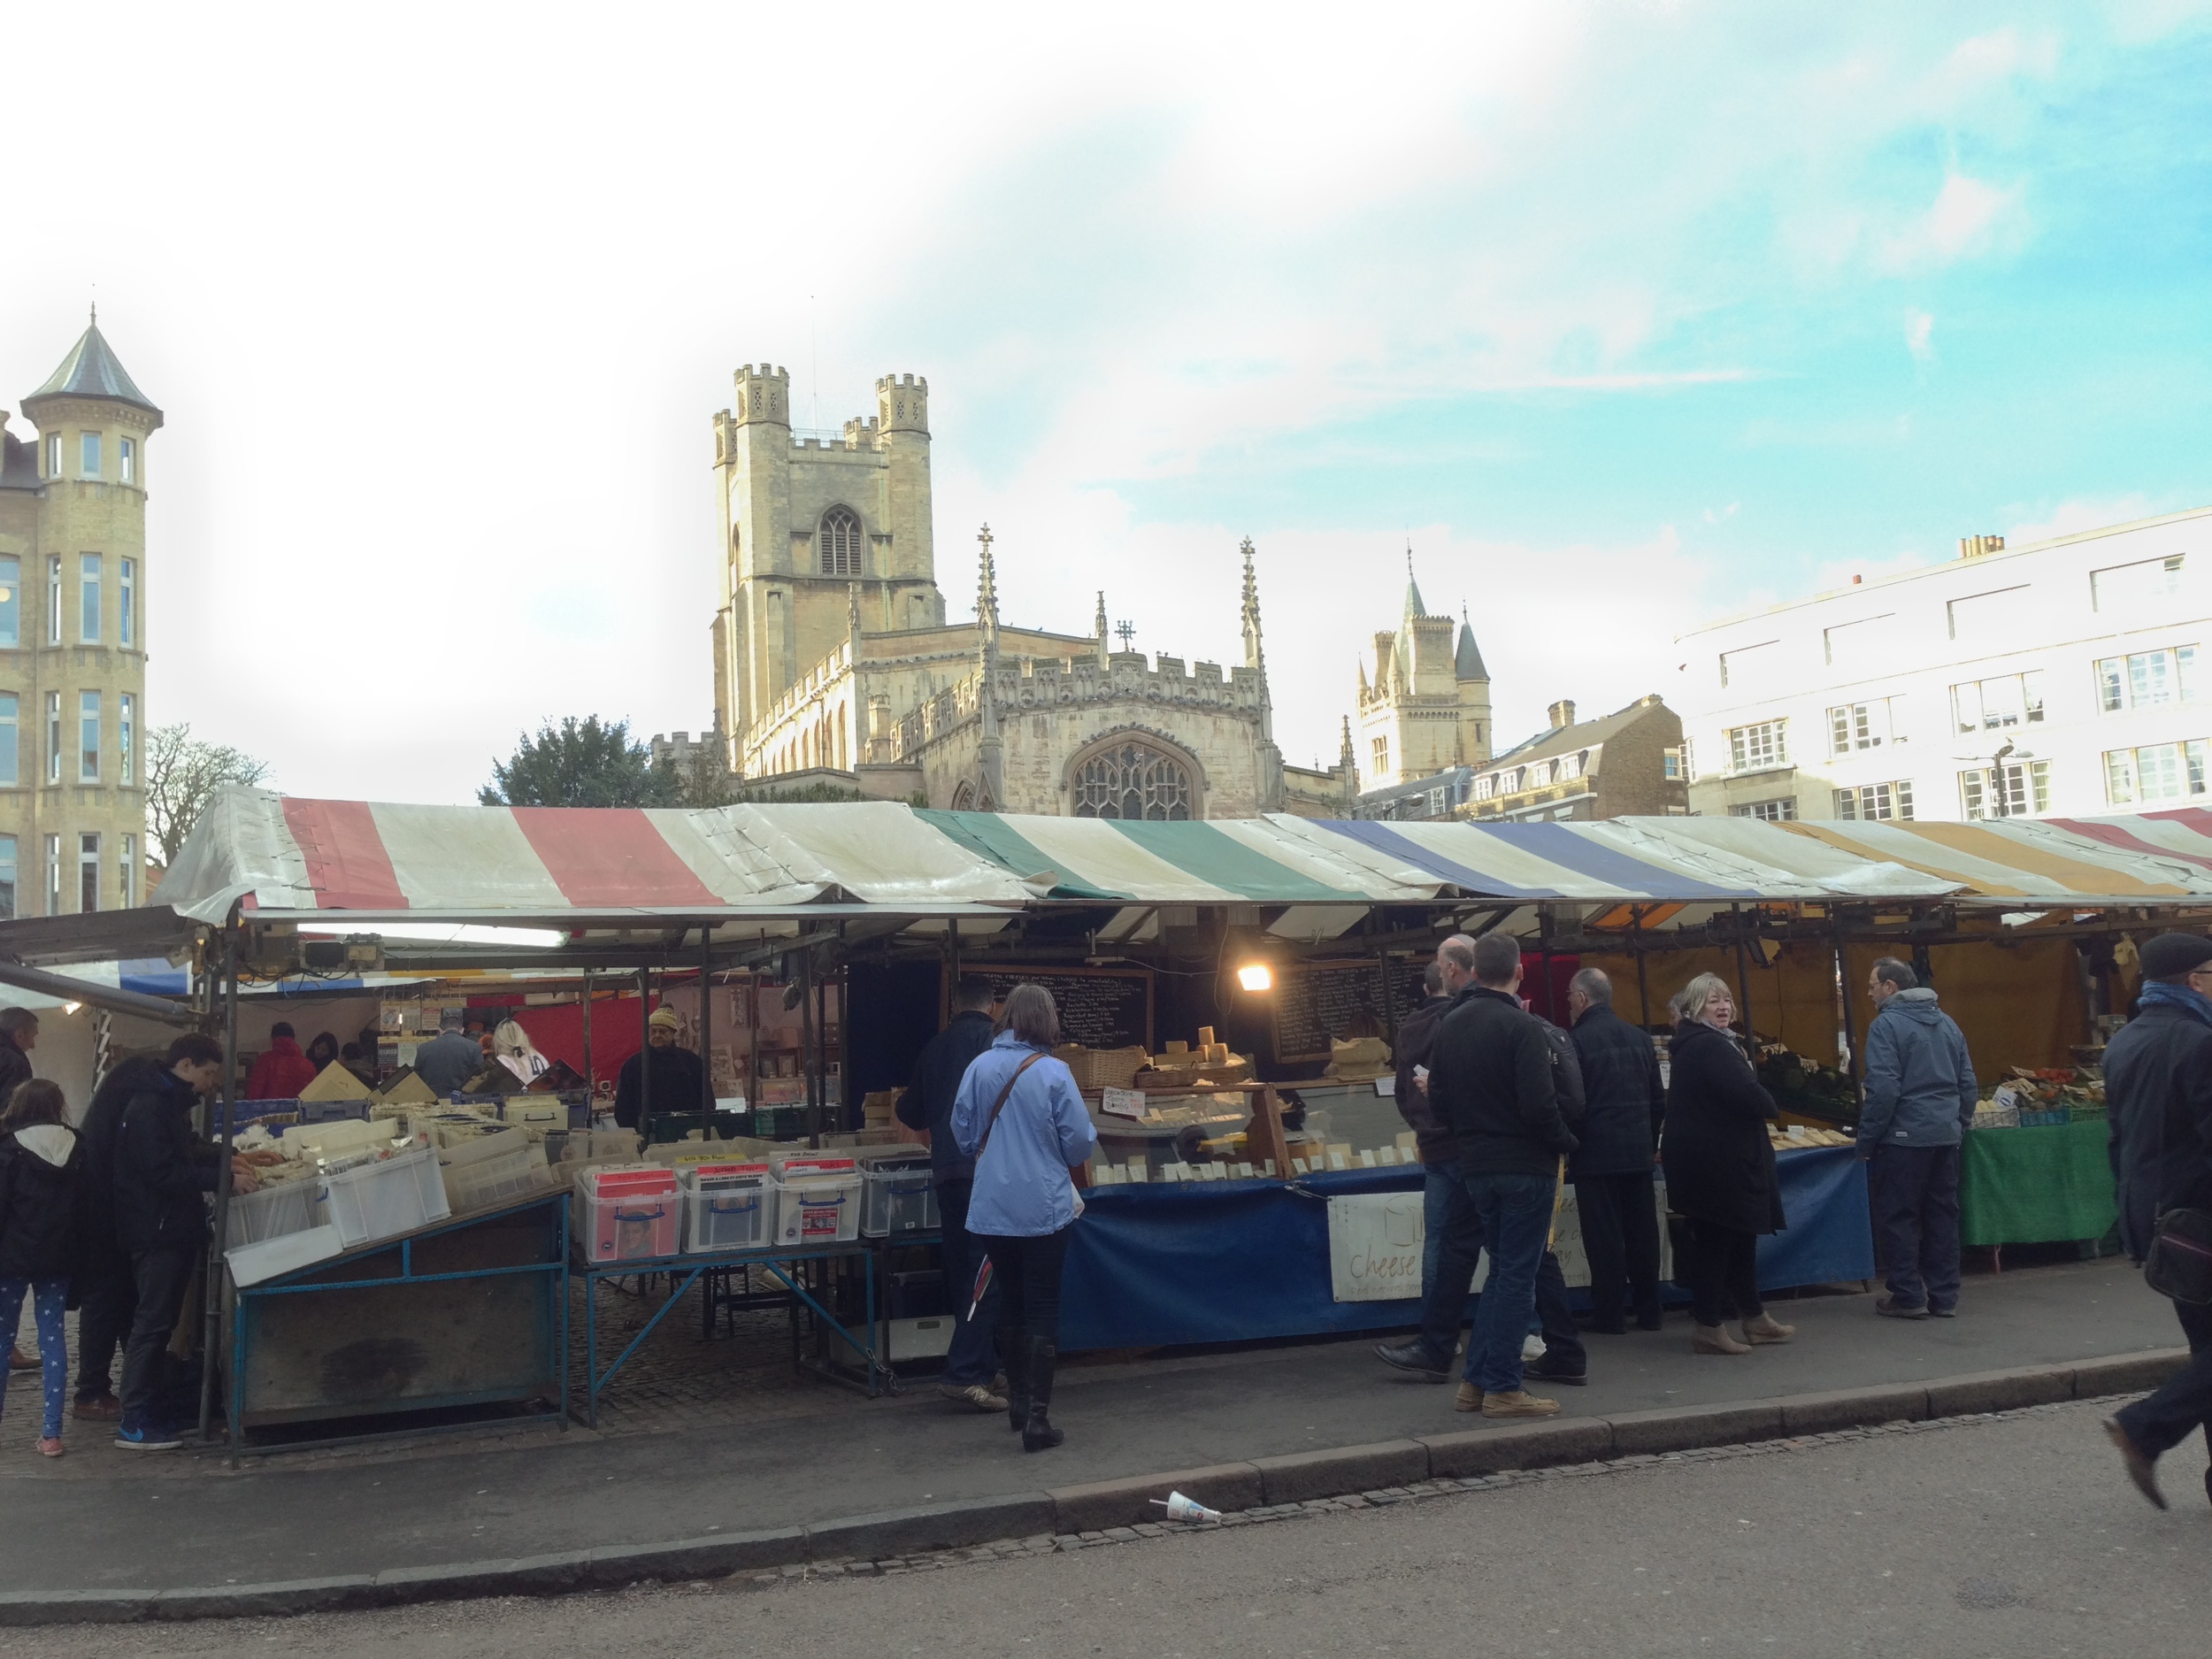  Marketplace - downtown Cambridge, UK 